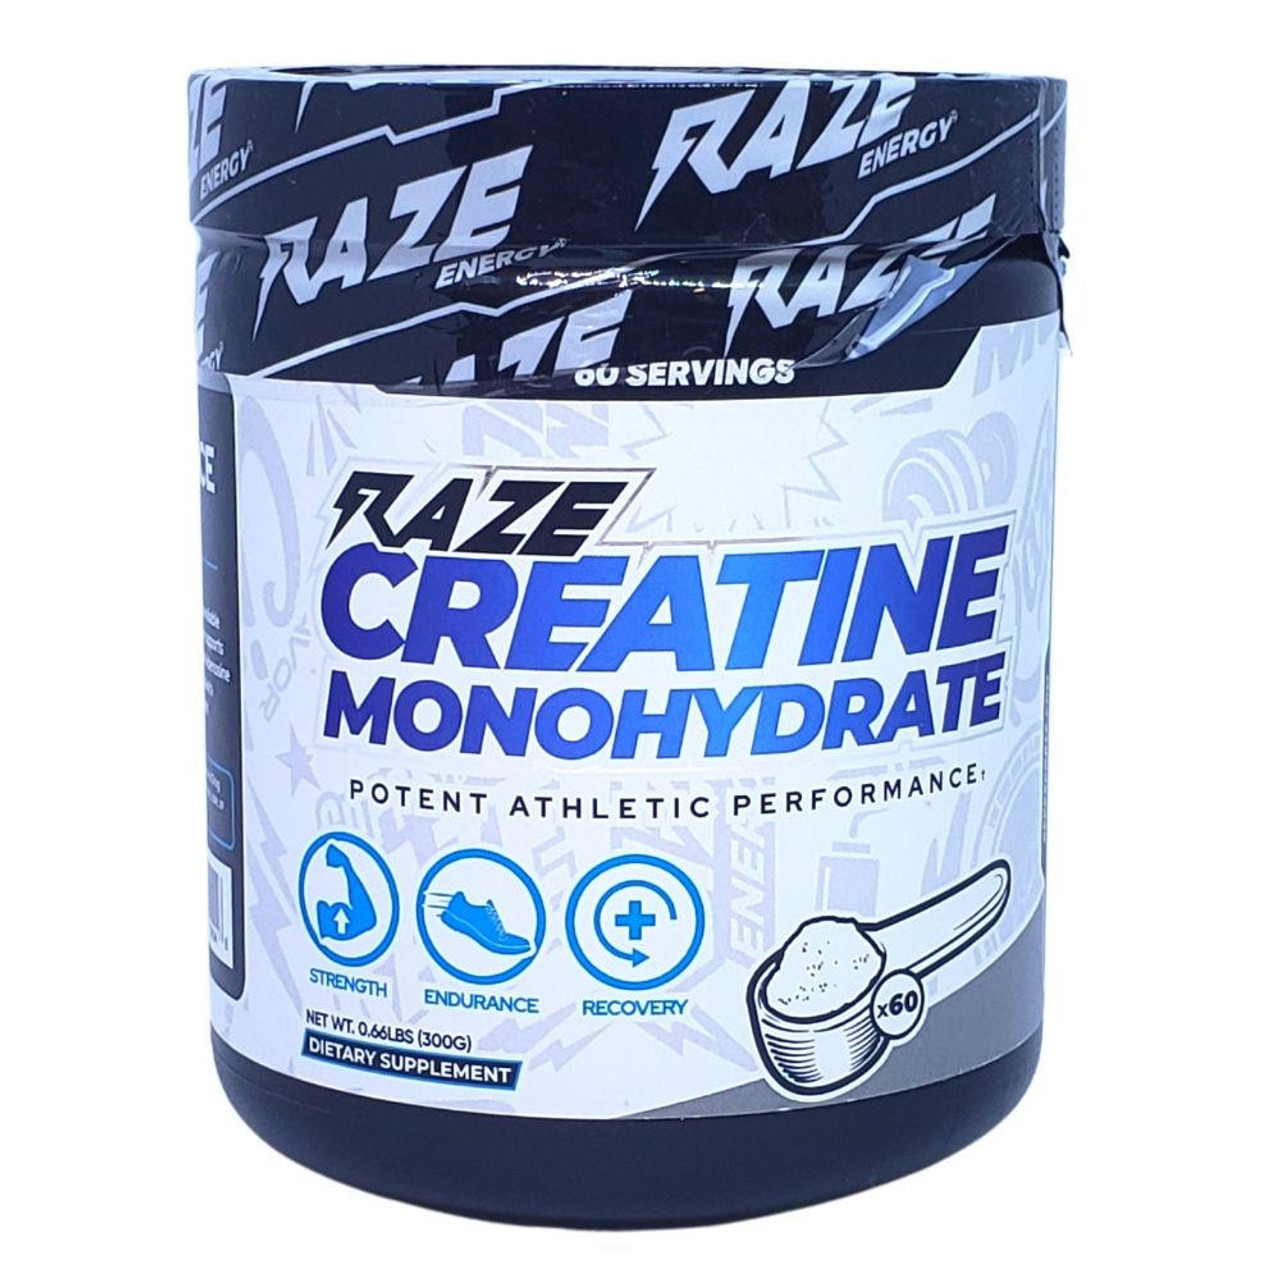 CREATINE - Creatine Monohydrate - KLOUT PWR